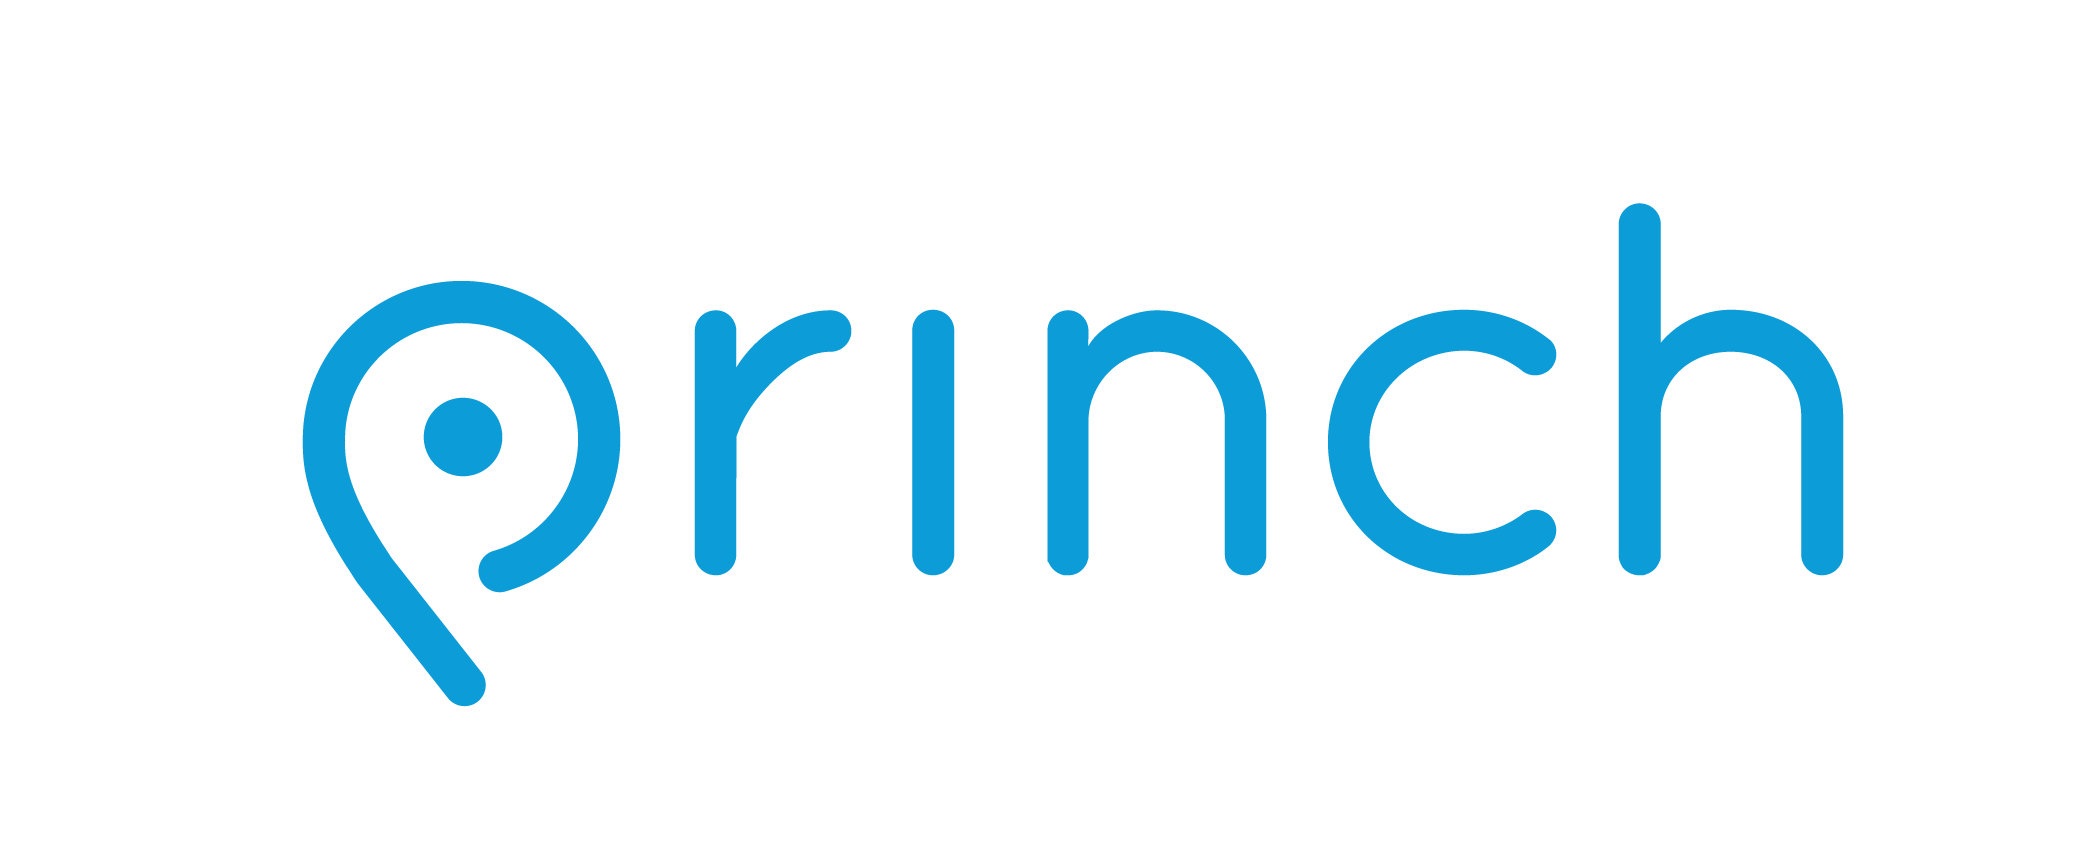 Princh logo blue